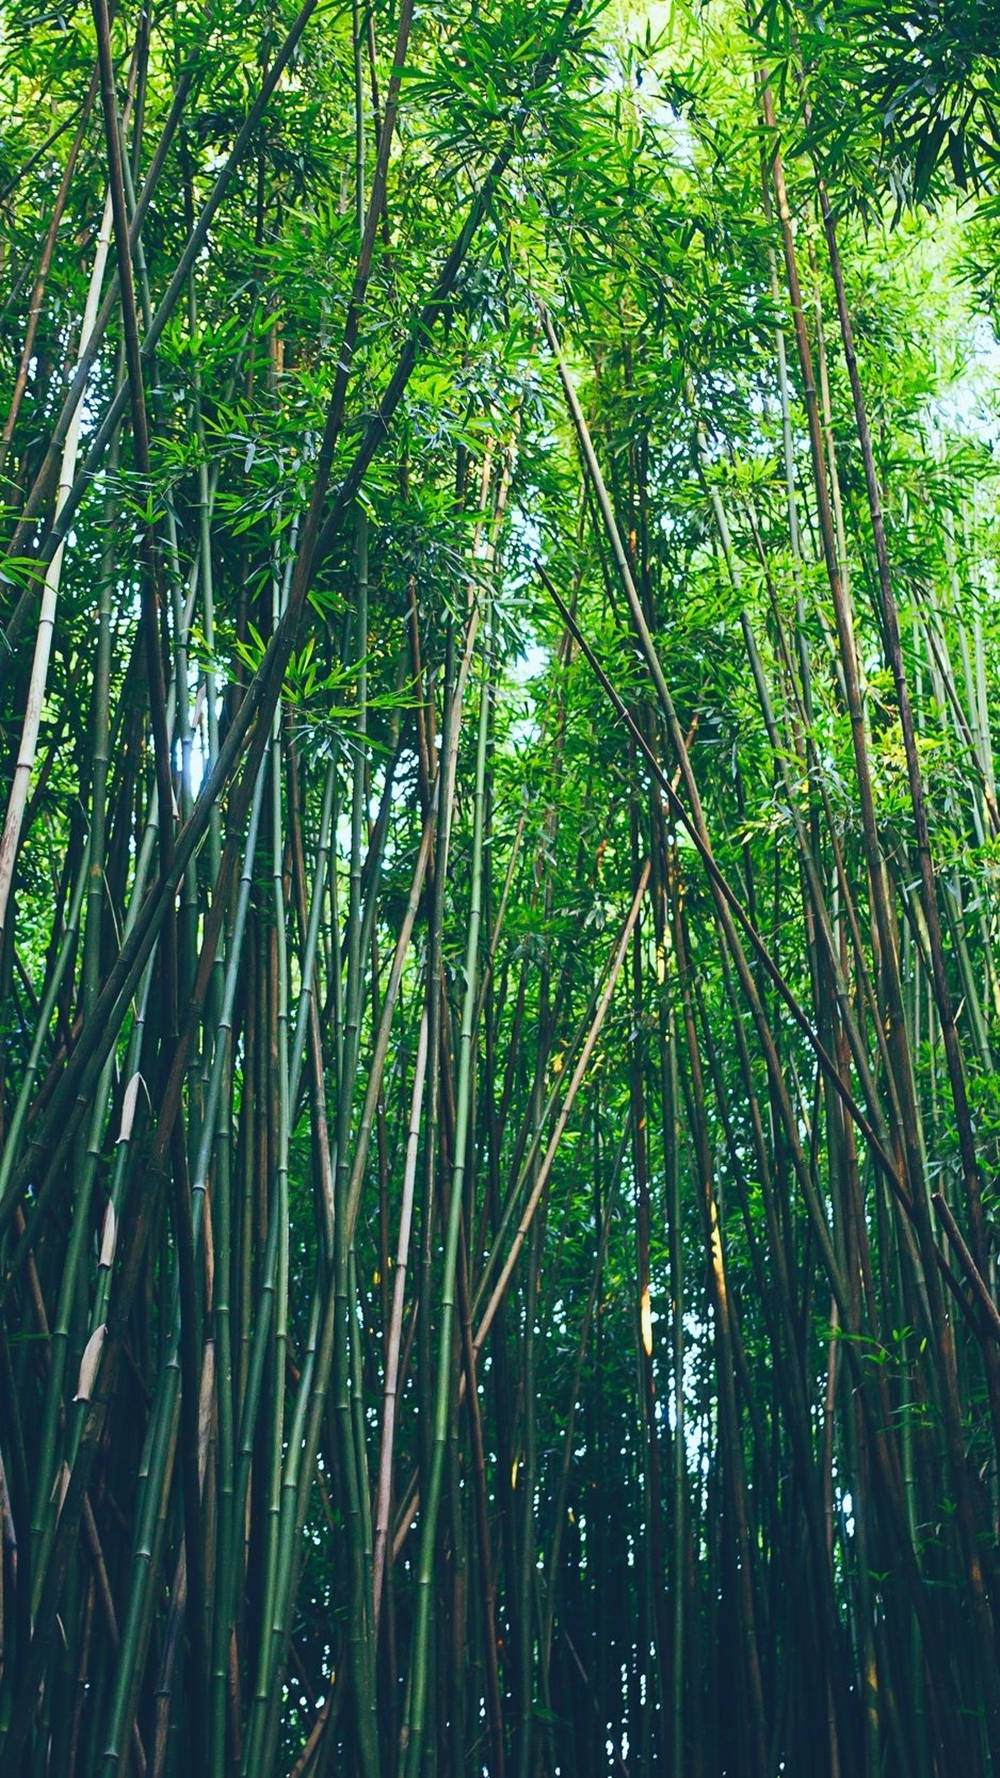 Dark Forest Bamboo Plants IPhone Wallpaper